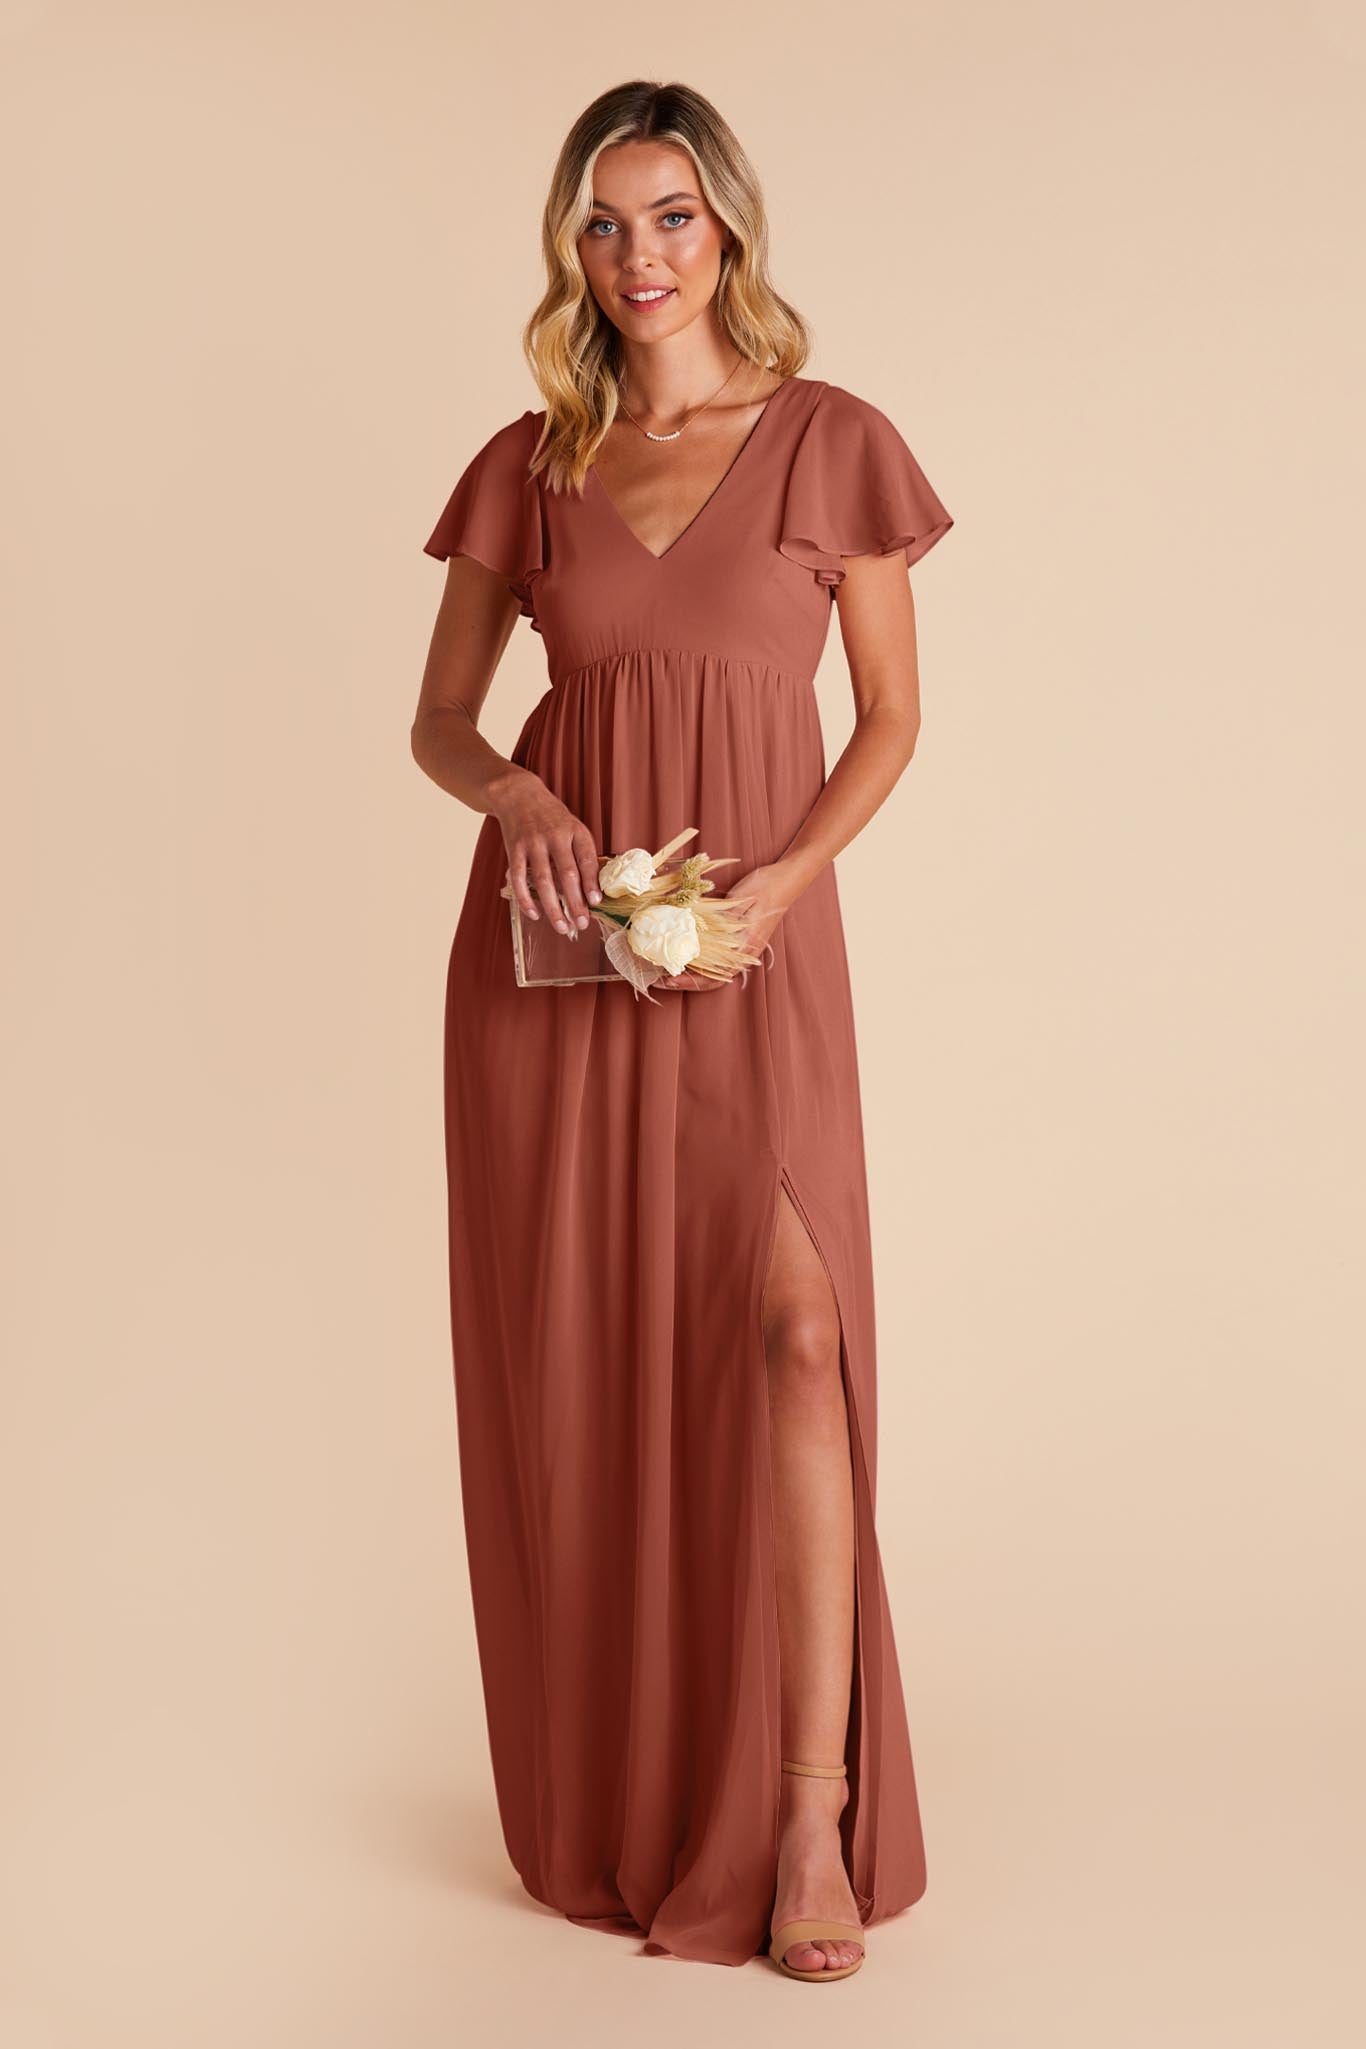 Desert Rose Hannah Empire Dress by Birdy Grey